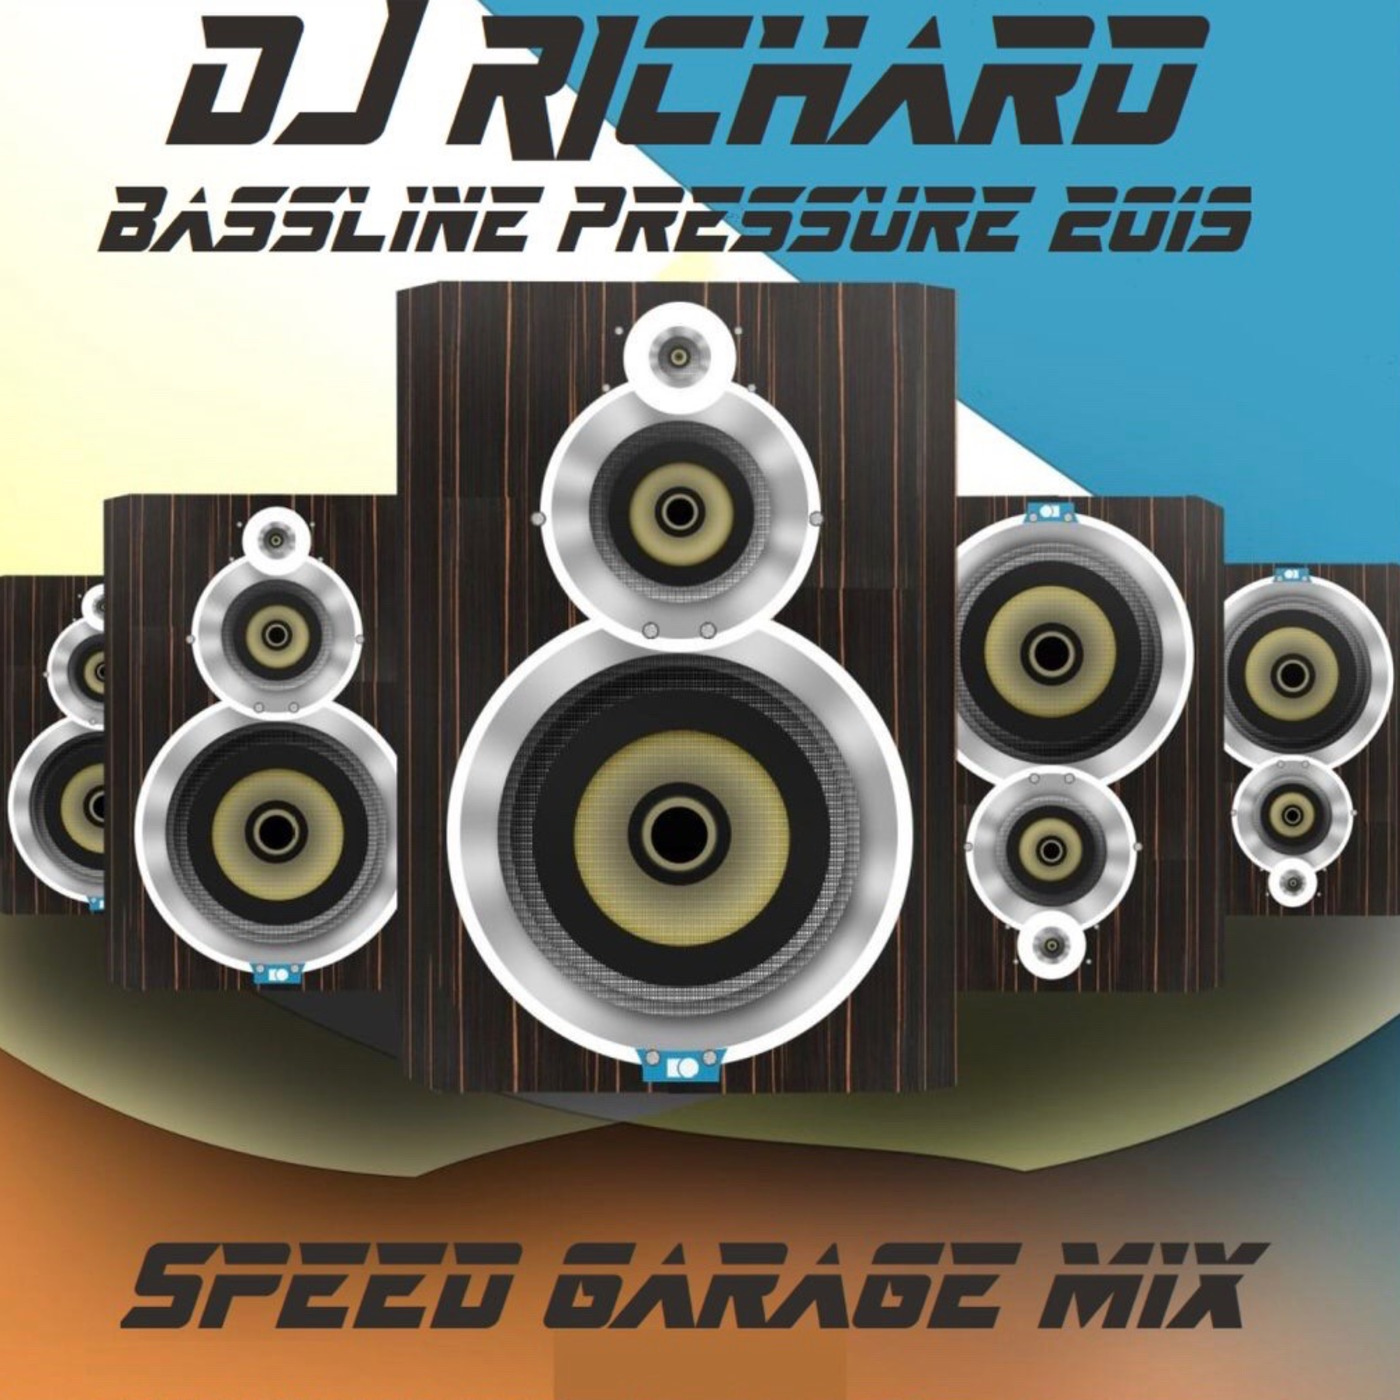 DJ Richard - Bassline Pressure 2019 - Vol 1 [Guest Mix]